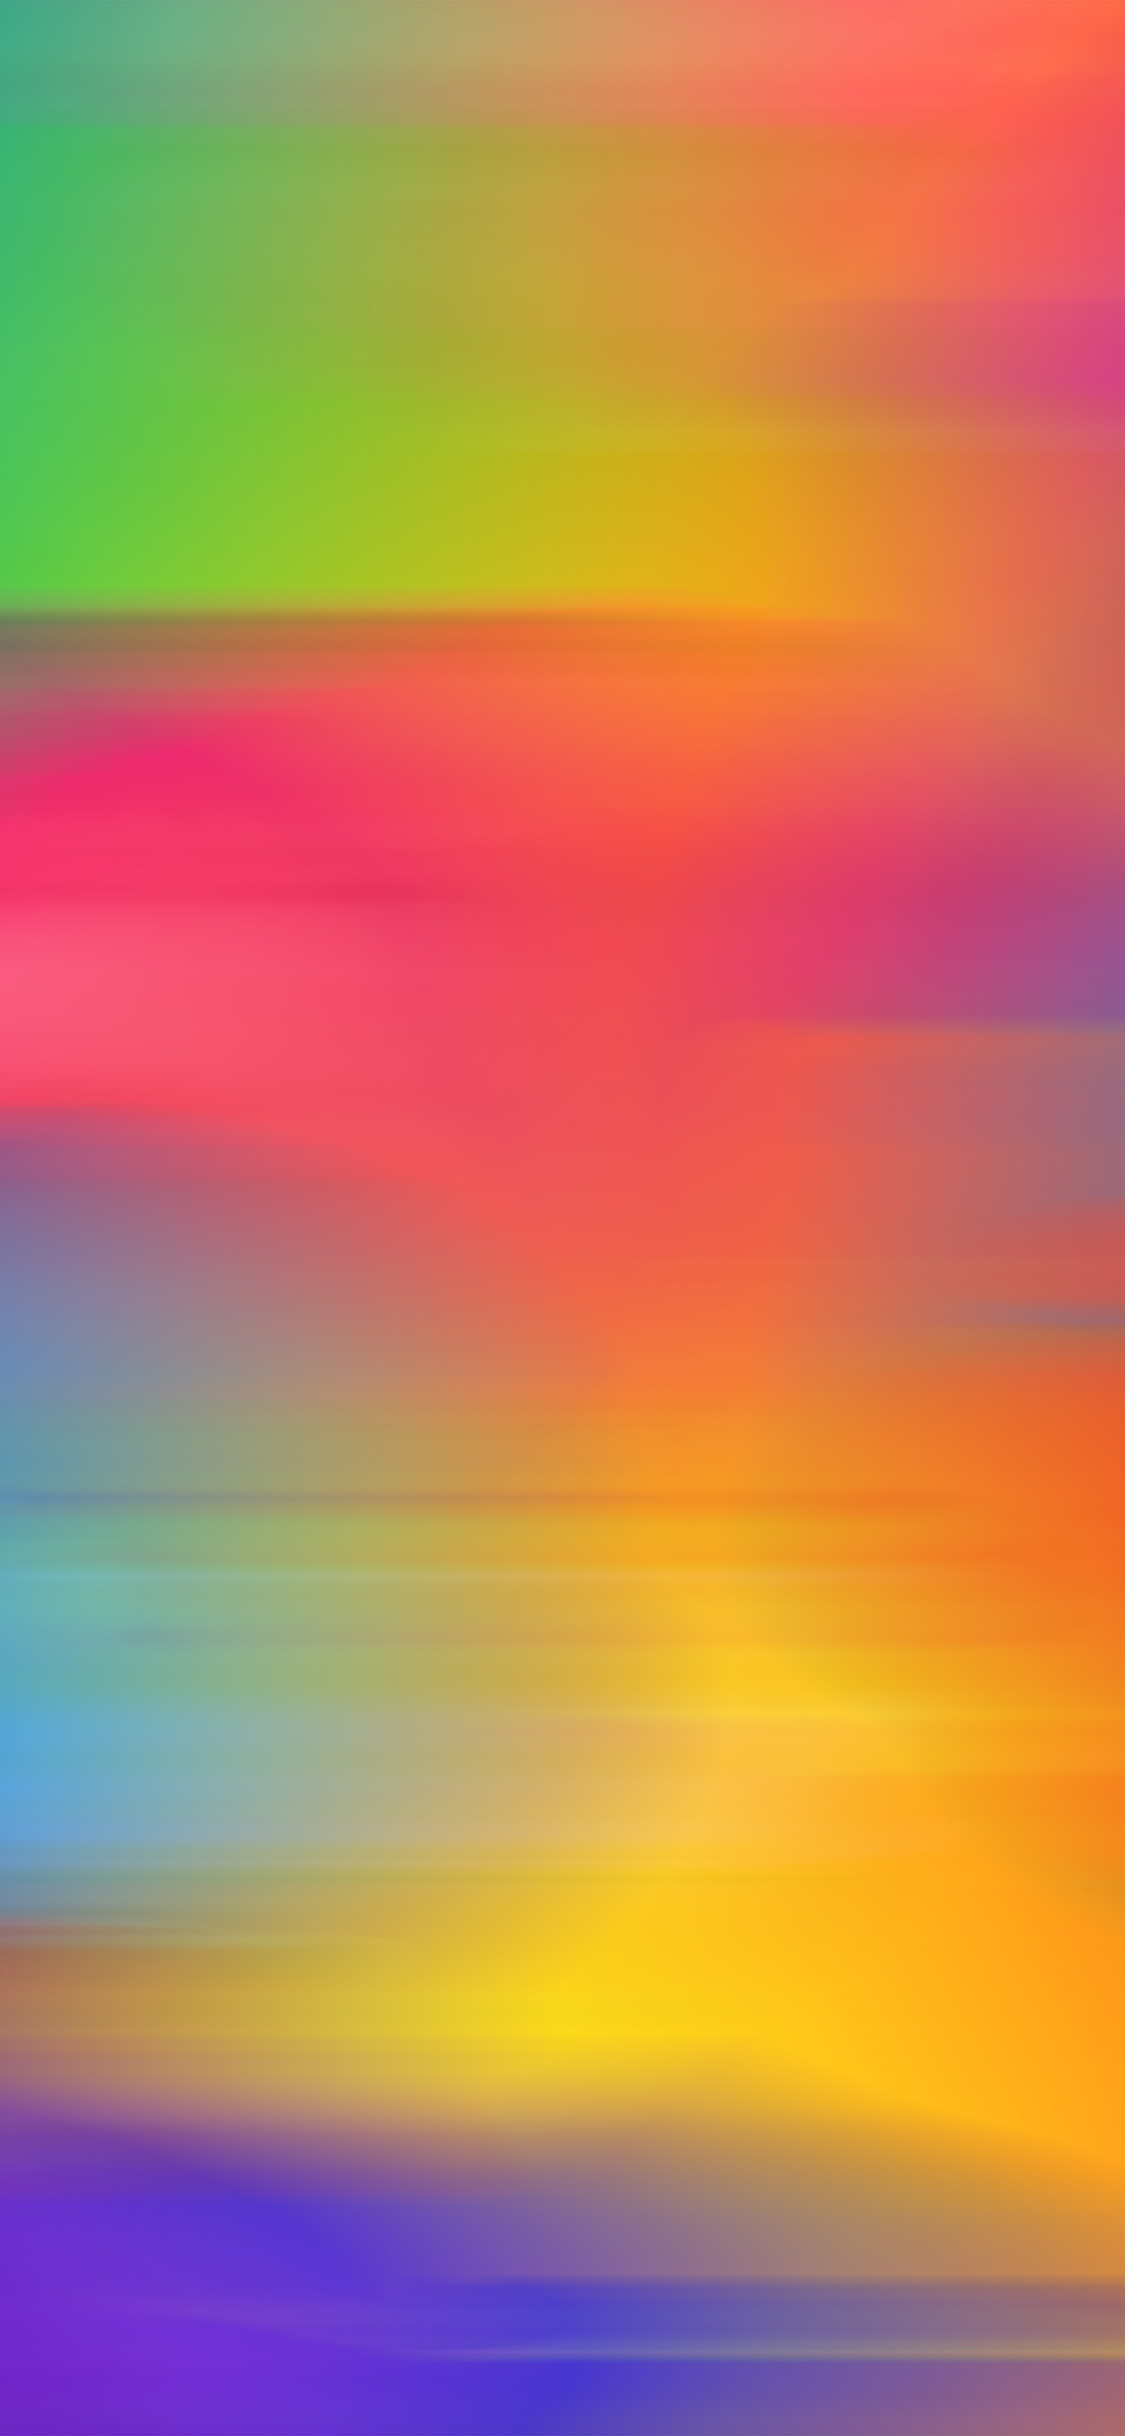 1125x2436 | iPhone11 wallpaper | vn05-rainbow-colorpaint-art-ink-default-pattern-moti